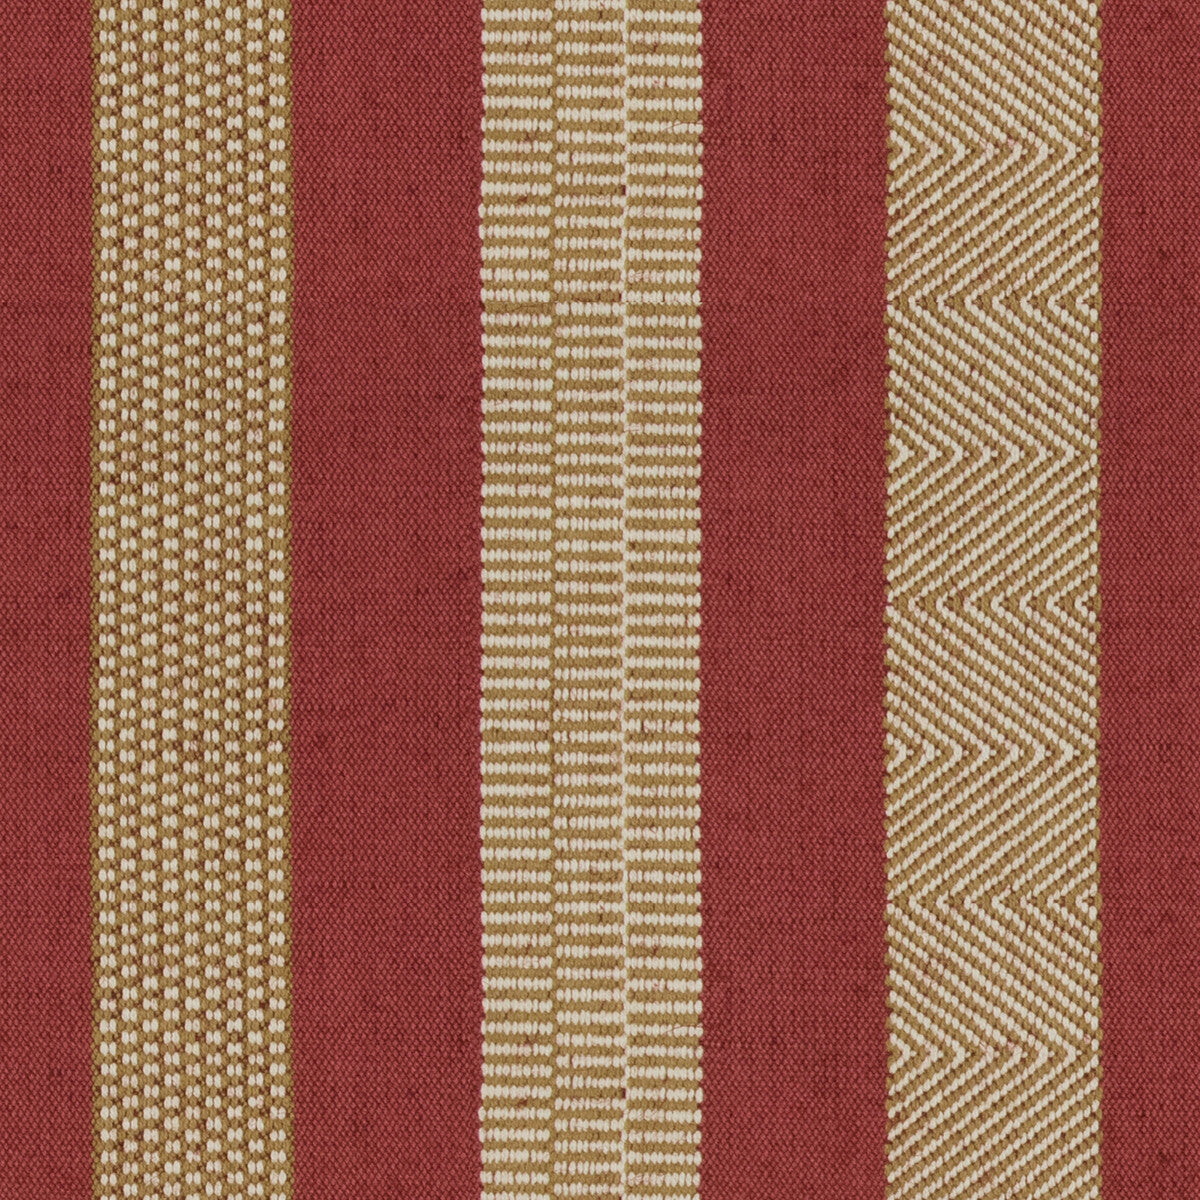 Berber fabric in rhubarb/oro color - pattern 2017100.940.0 - by Lee Jofa in the Oscar De La Renta III collection